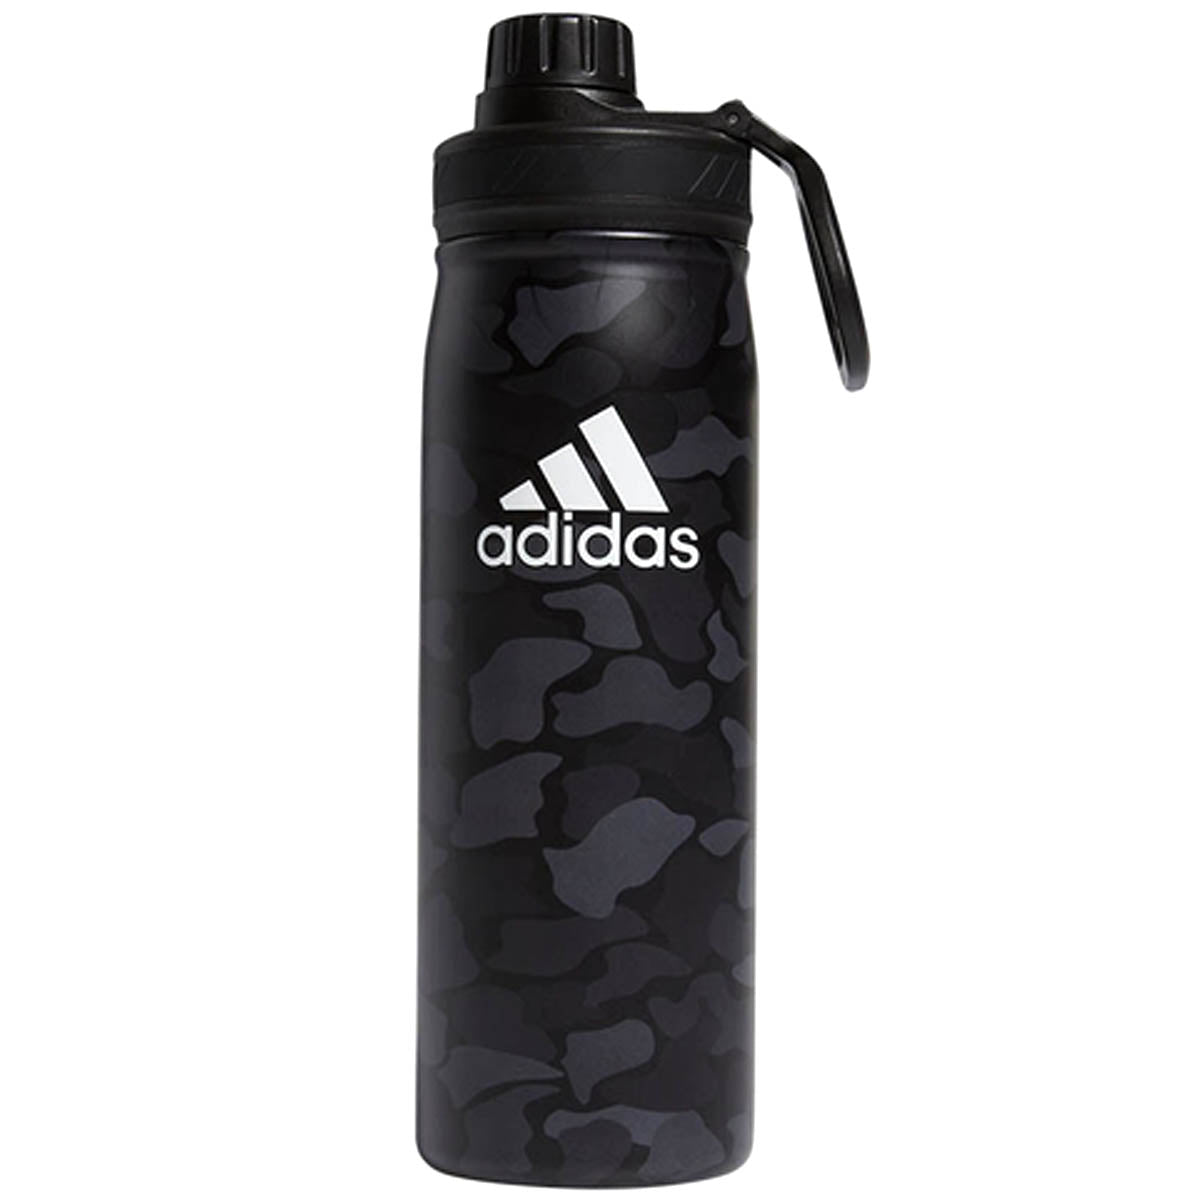 Adidas Steel Metal Bottle 1L Black